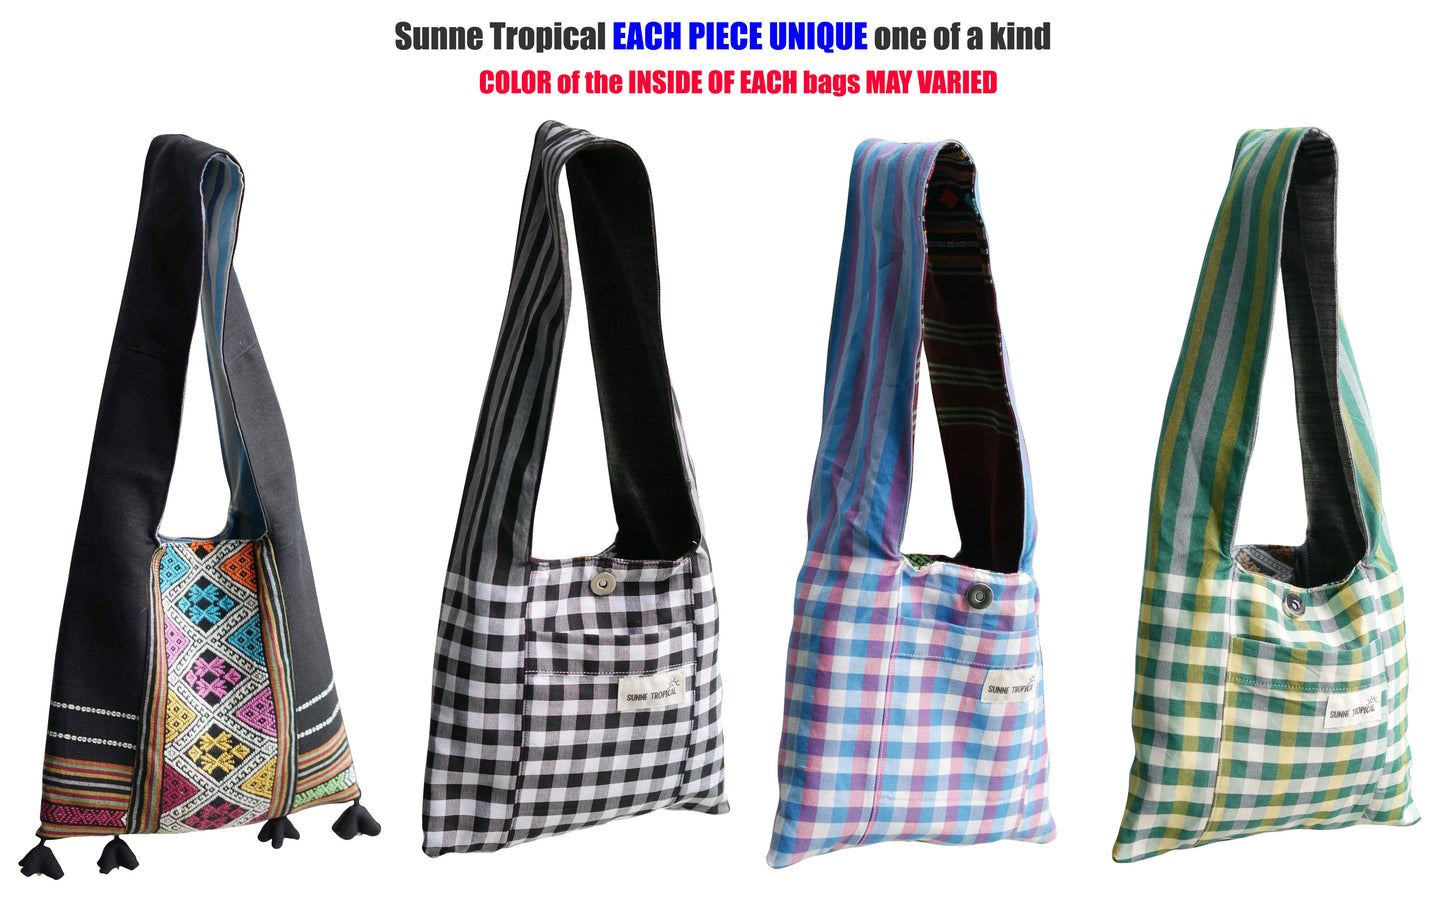 Handwoven Hand-dyed Handmade ETHNICS MINI shoulder bag tote bag Sunne Tropical - BROWN CHOCOLATE